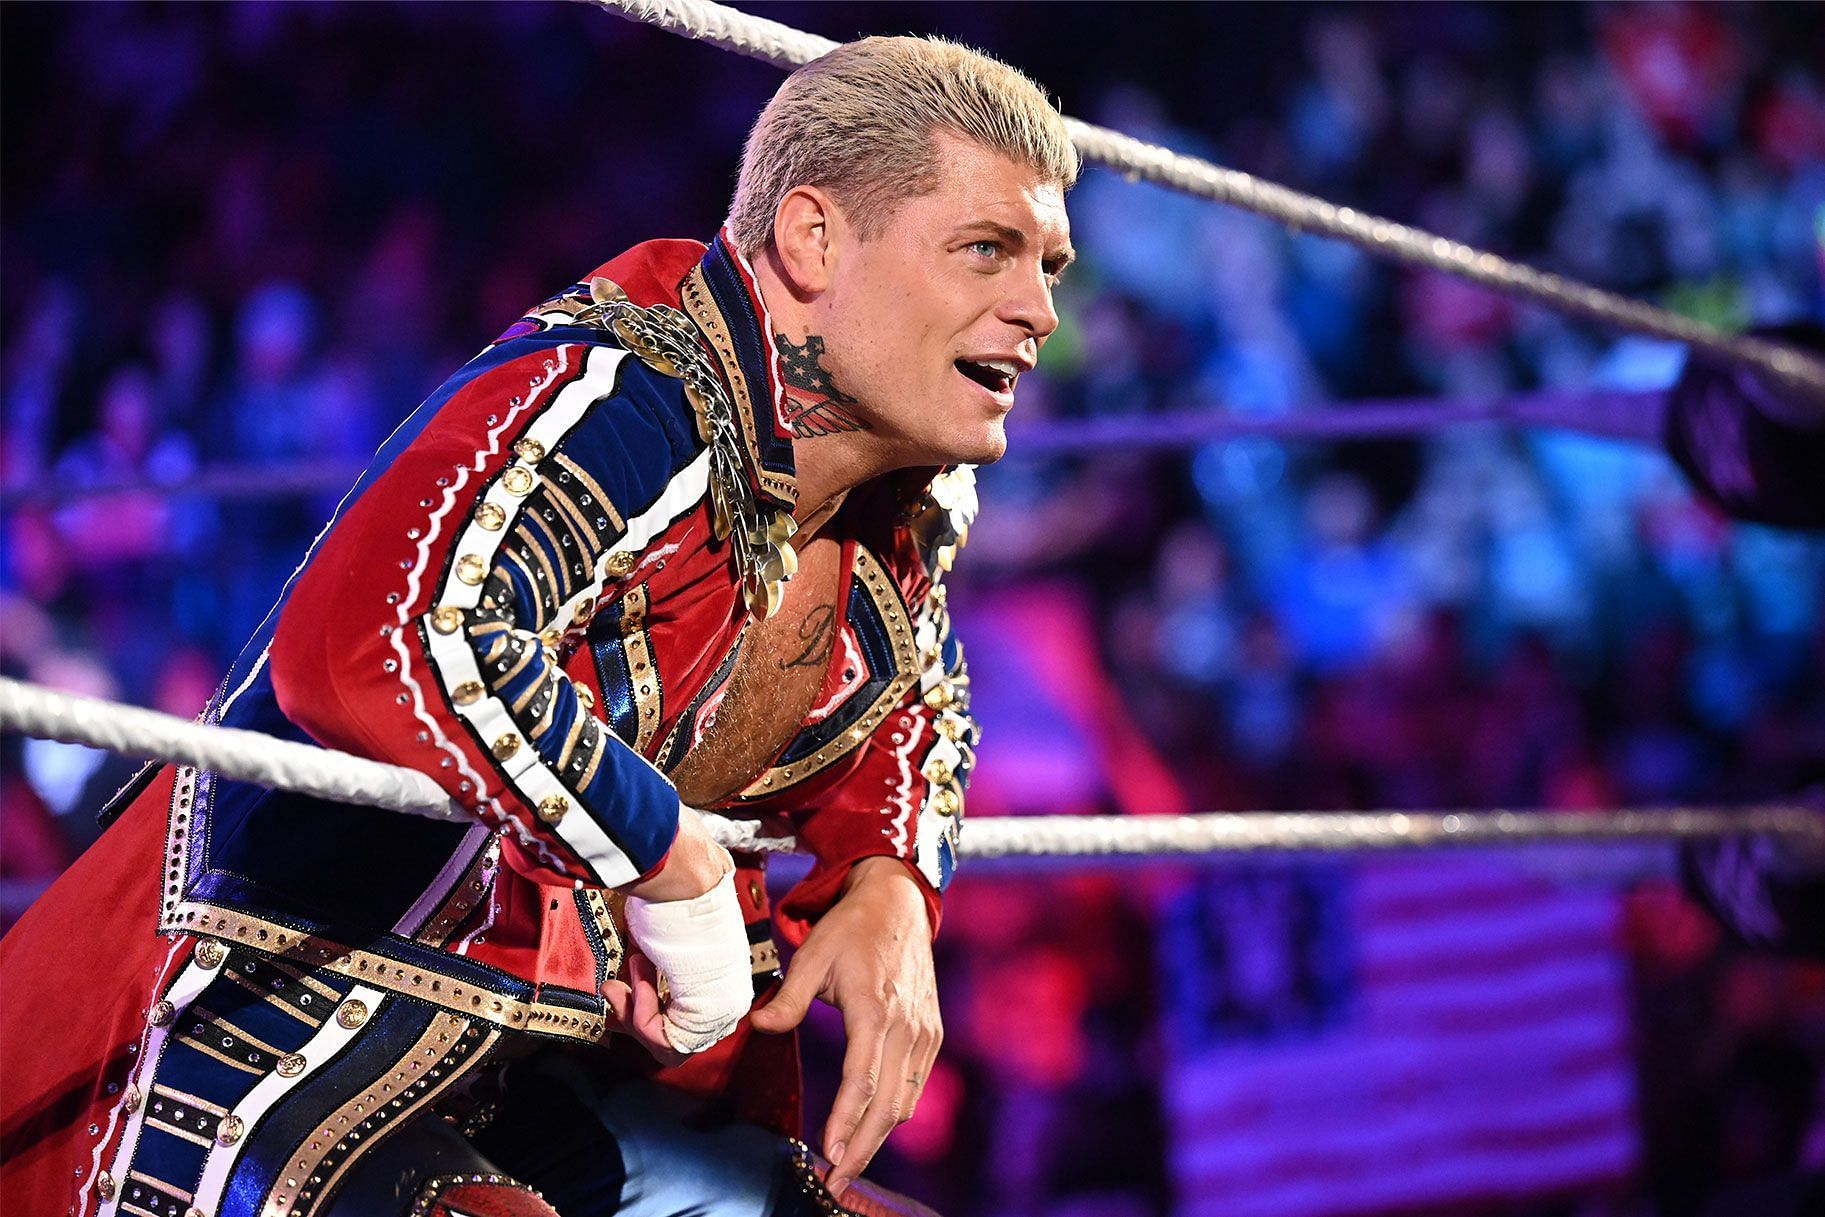 The American Nightmare, WWE Superstar Cody Rhodes